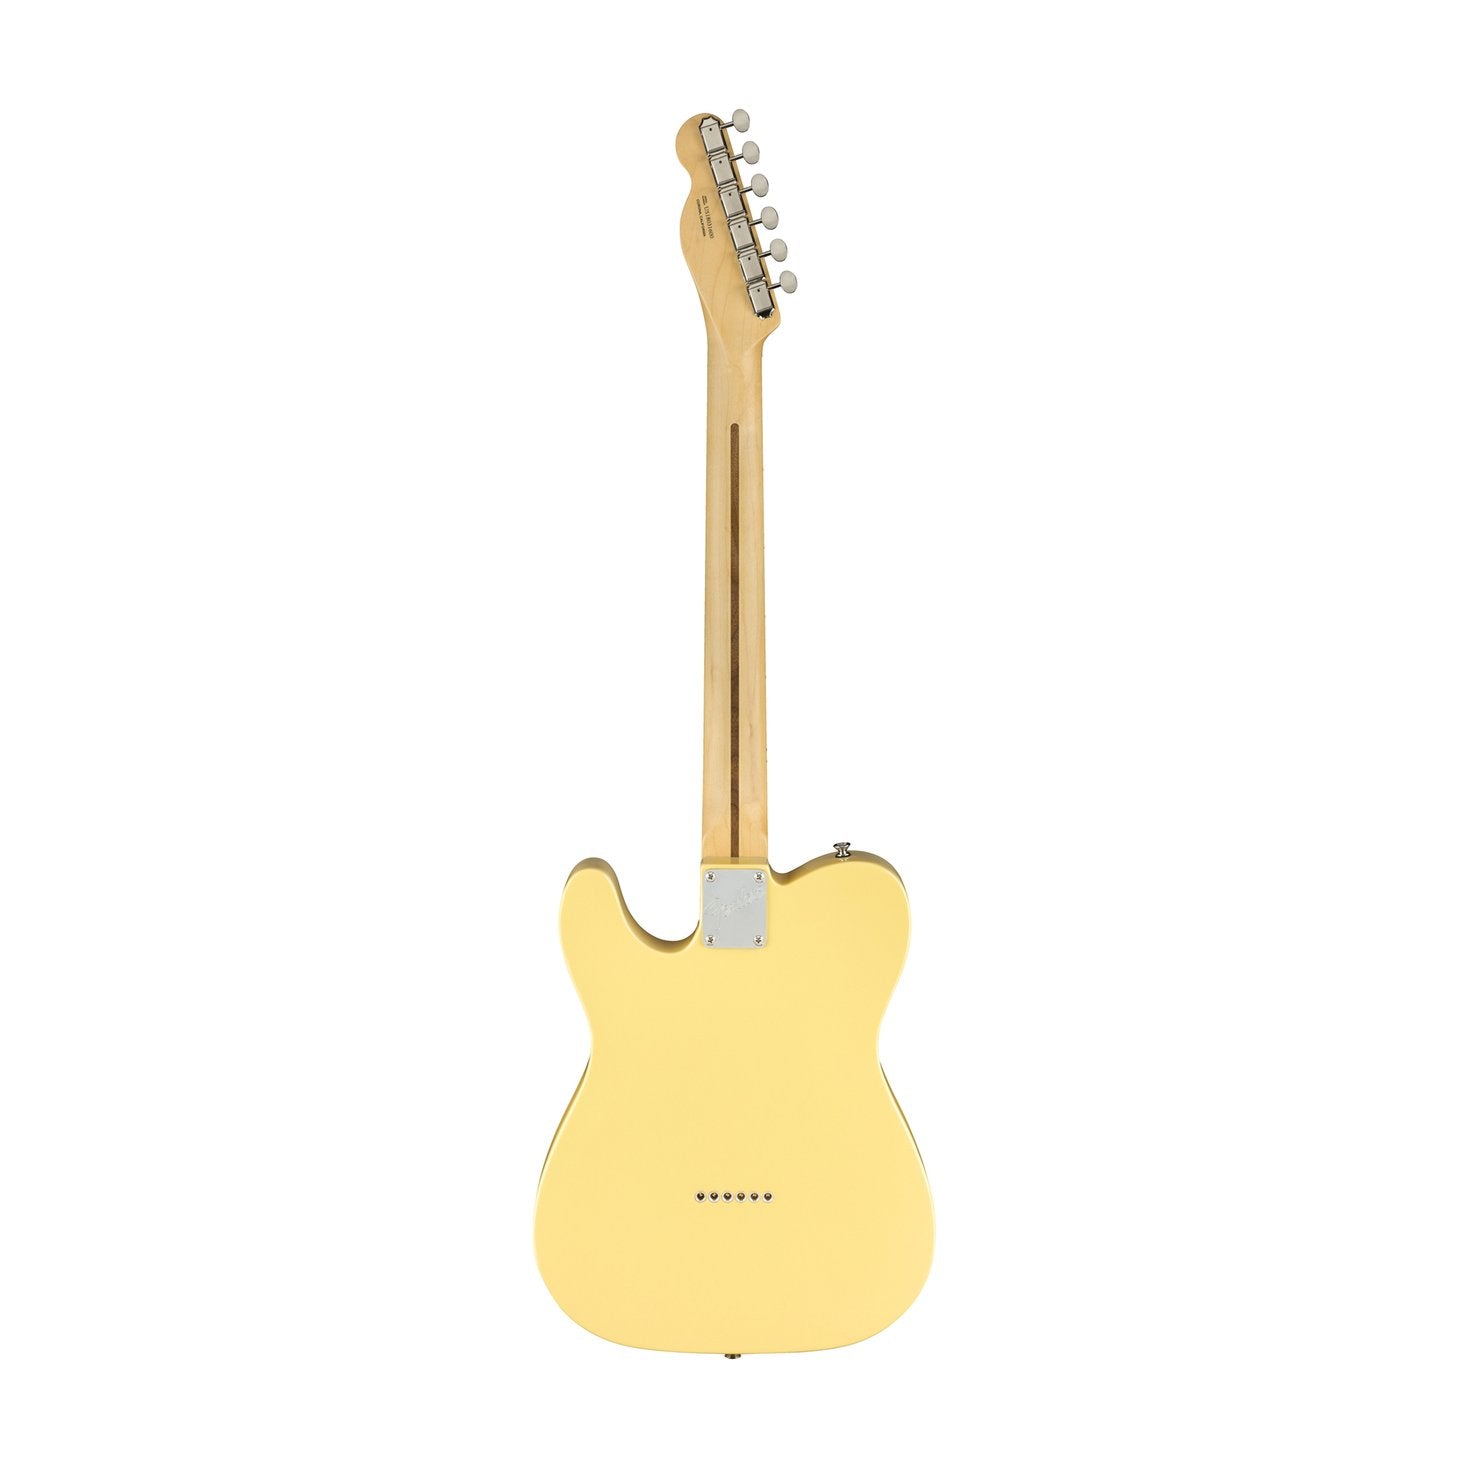 Fender American Performer Telecaster Electric Guitar, Maple FB, Vintage White, FENDER, ELECTRIC GUITAR, fender-electric-guitar-f03-011-5112-341, ZOSO MUSIC SDN BHD